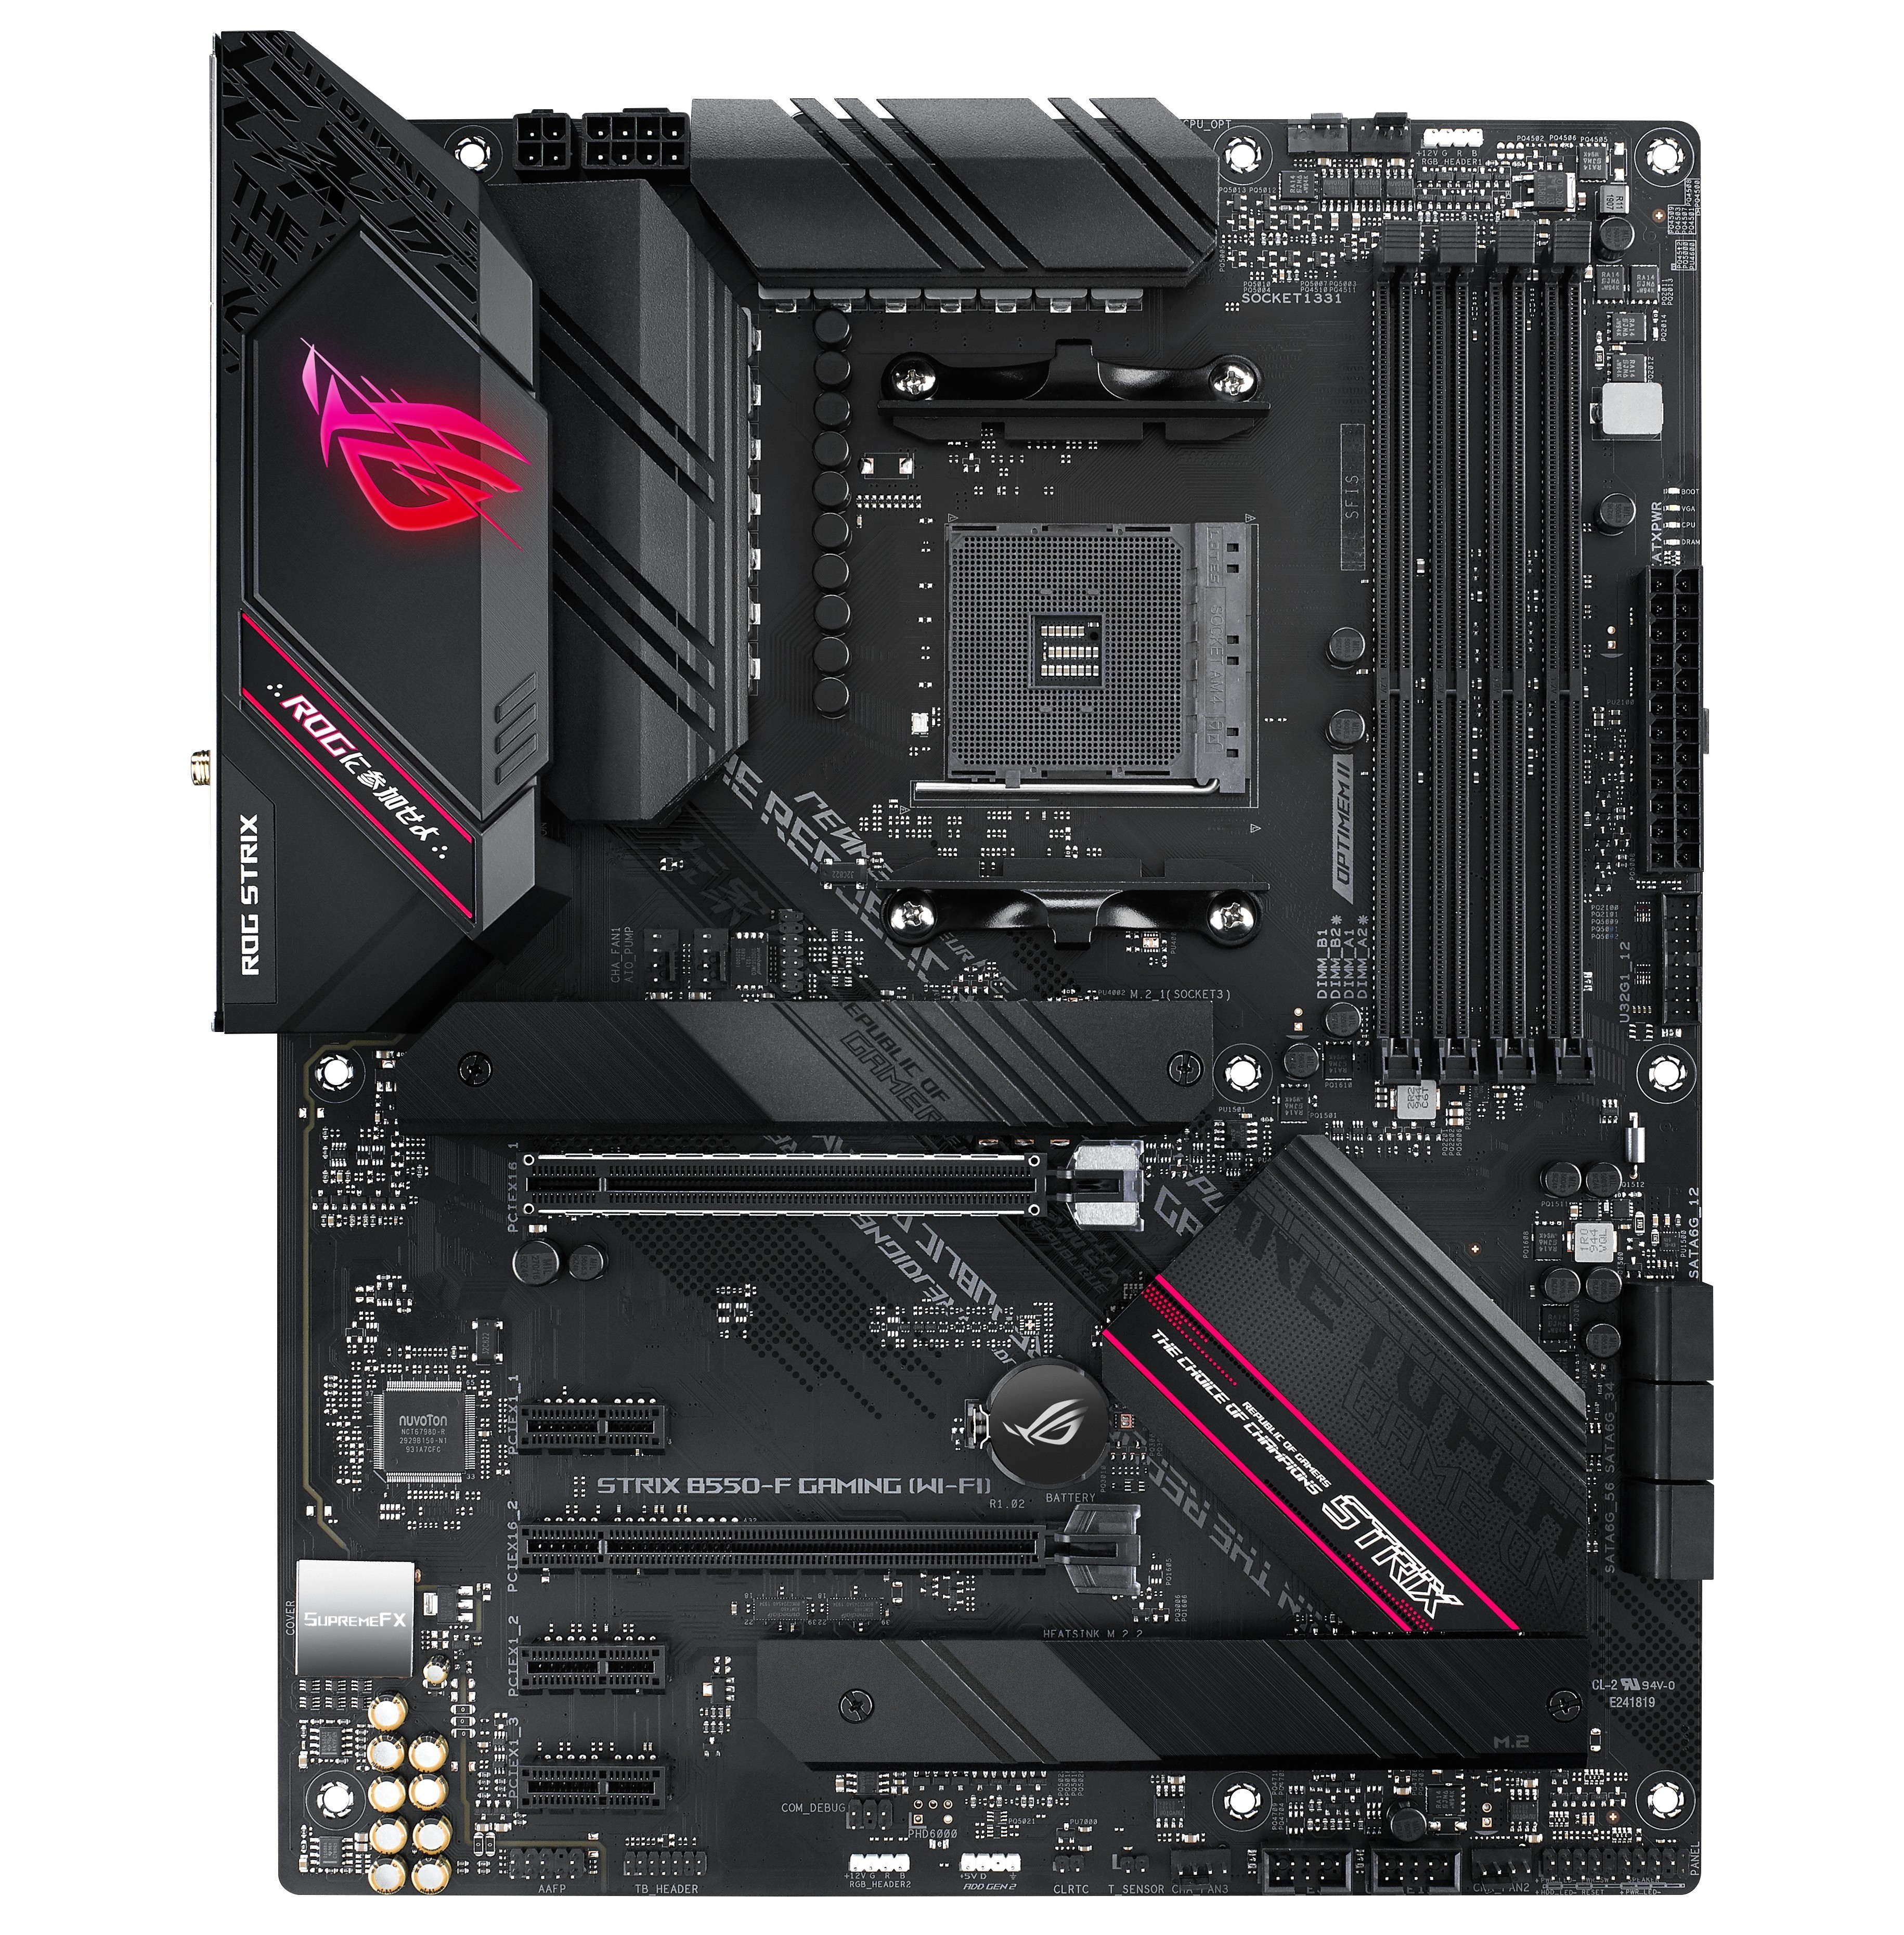 ASUS ROG Strix B550-F Gaming + Wi-Fi - The AMD B550 Motherboard